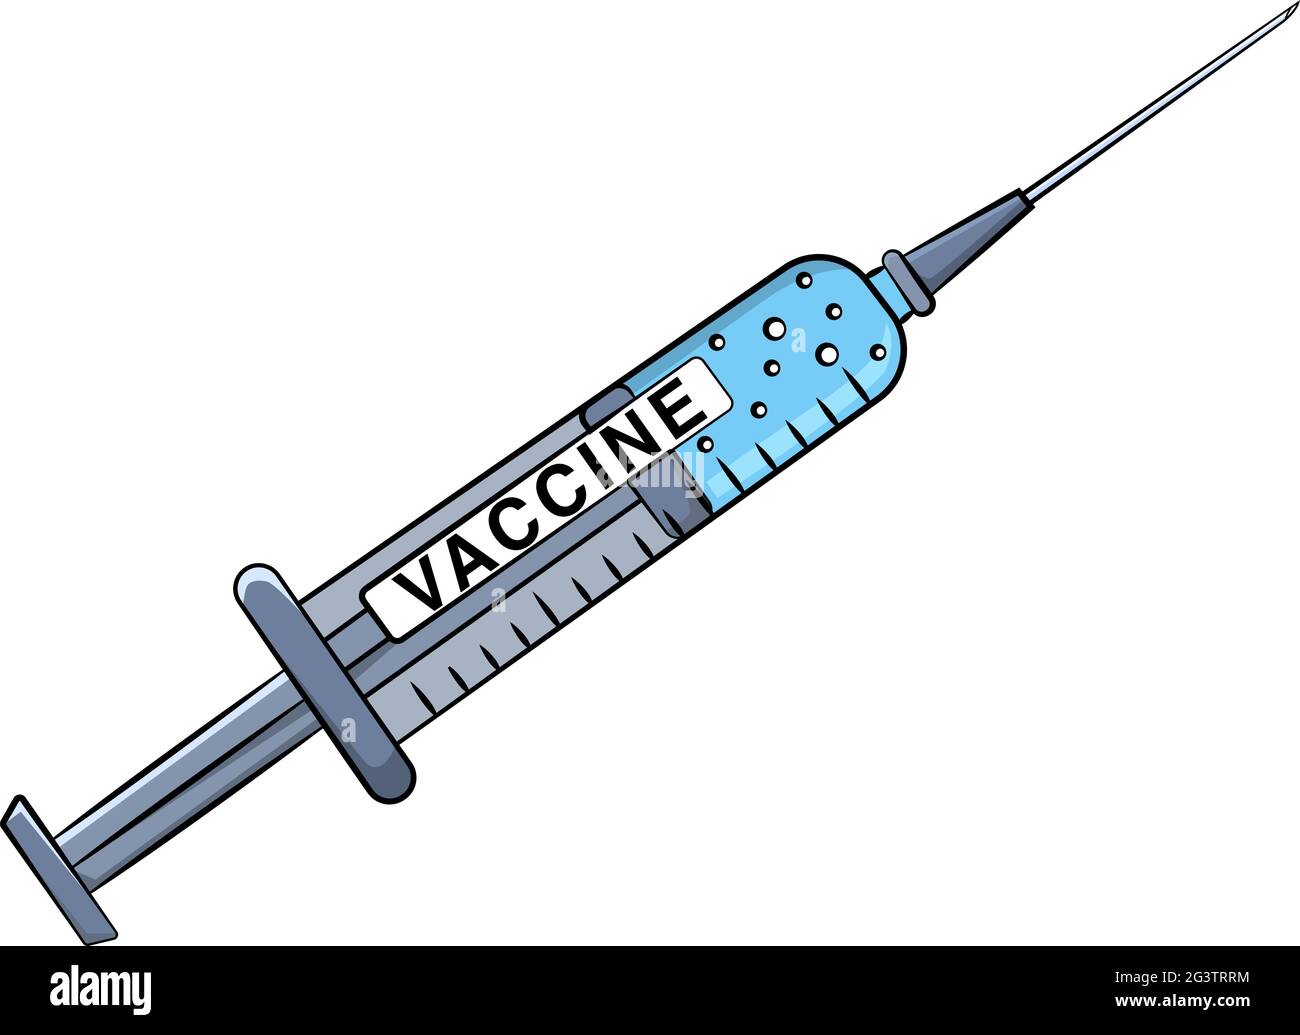 cartoon-vector-illustration-of-a-vaccine-syringe-needle-2G3TRRM.jpg